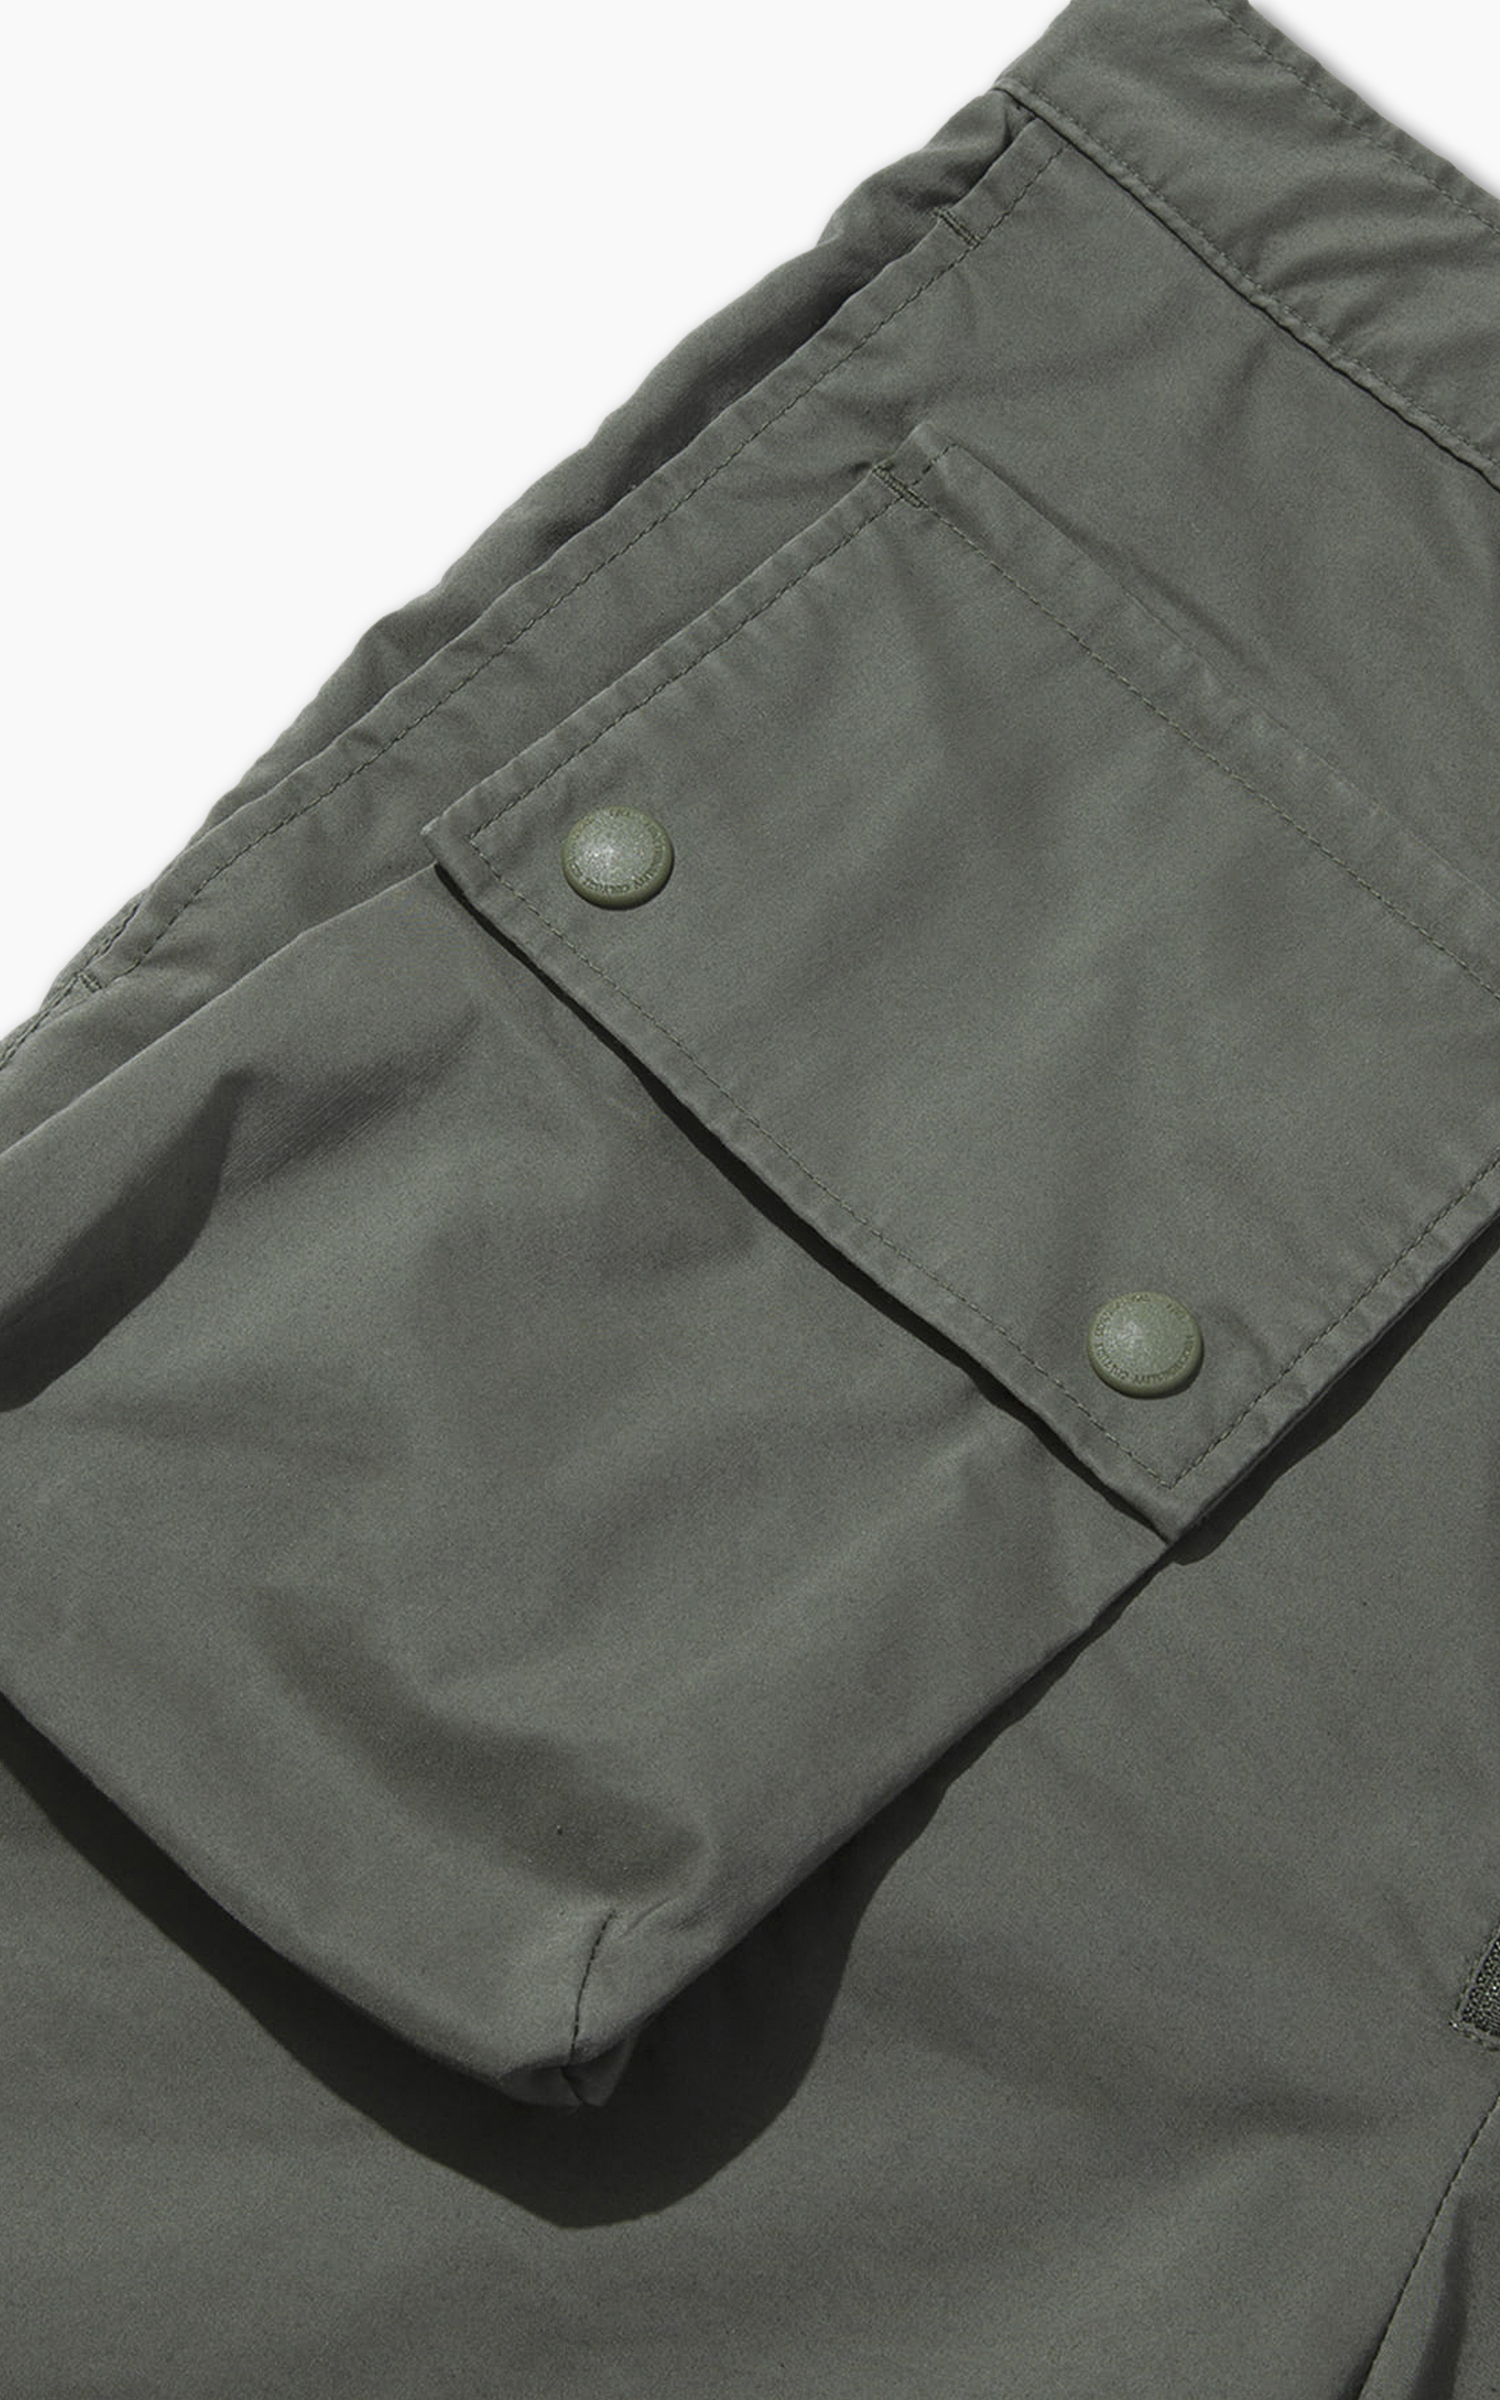 F/CE. x Digawel 6 Pockets Shorts Olive | Cultizm